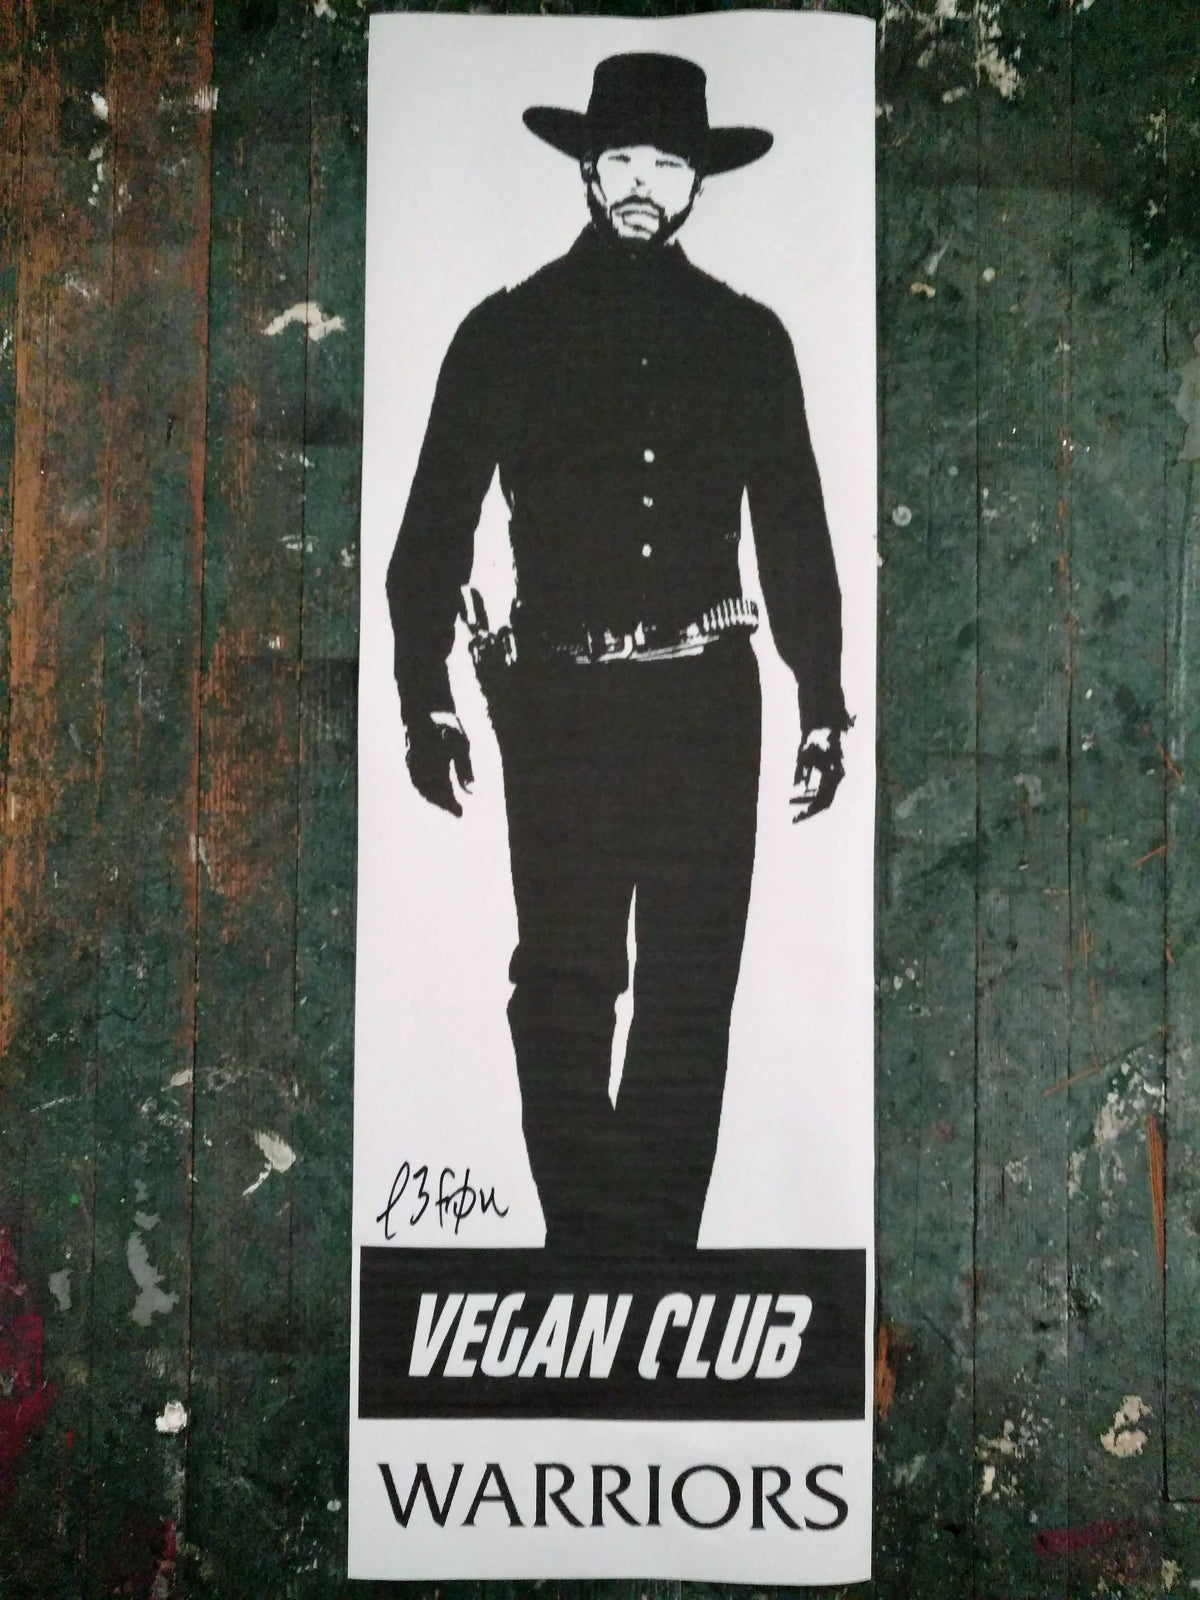 Limited Street Art NewsPrint Poster Vegan Club Warriors feat an activist like James Aspey, Shaun Monson, ... signed L3F0u - frame optional